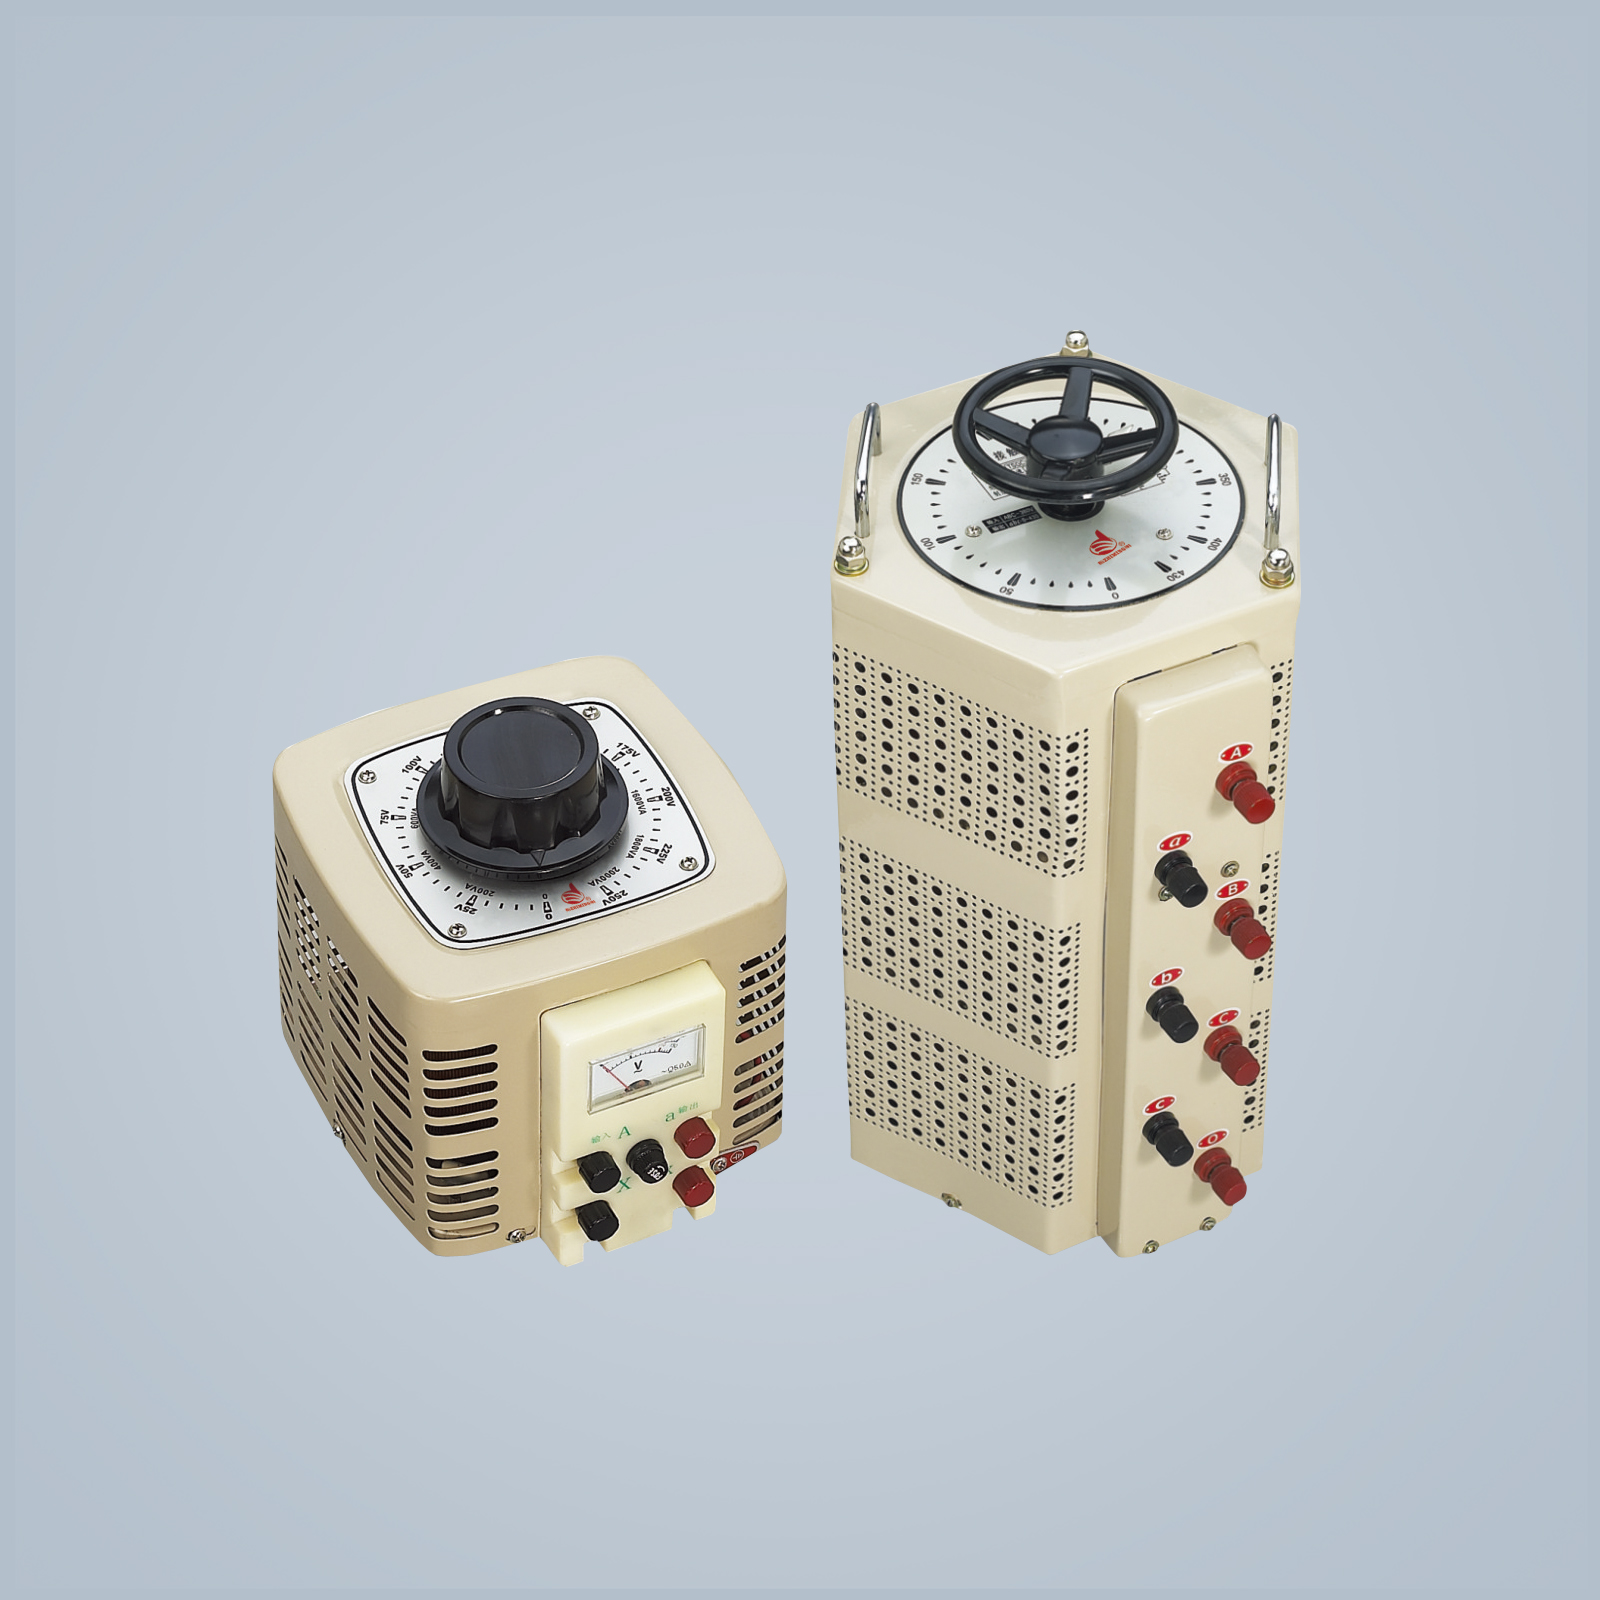 TDGC/TSGC Series Voltage Regulator